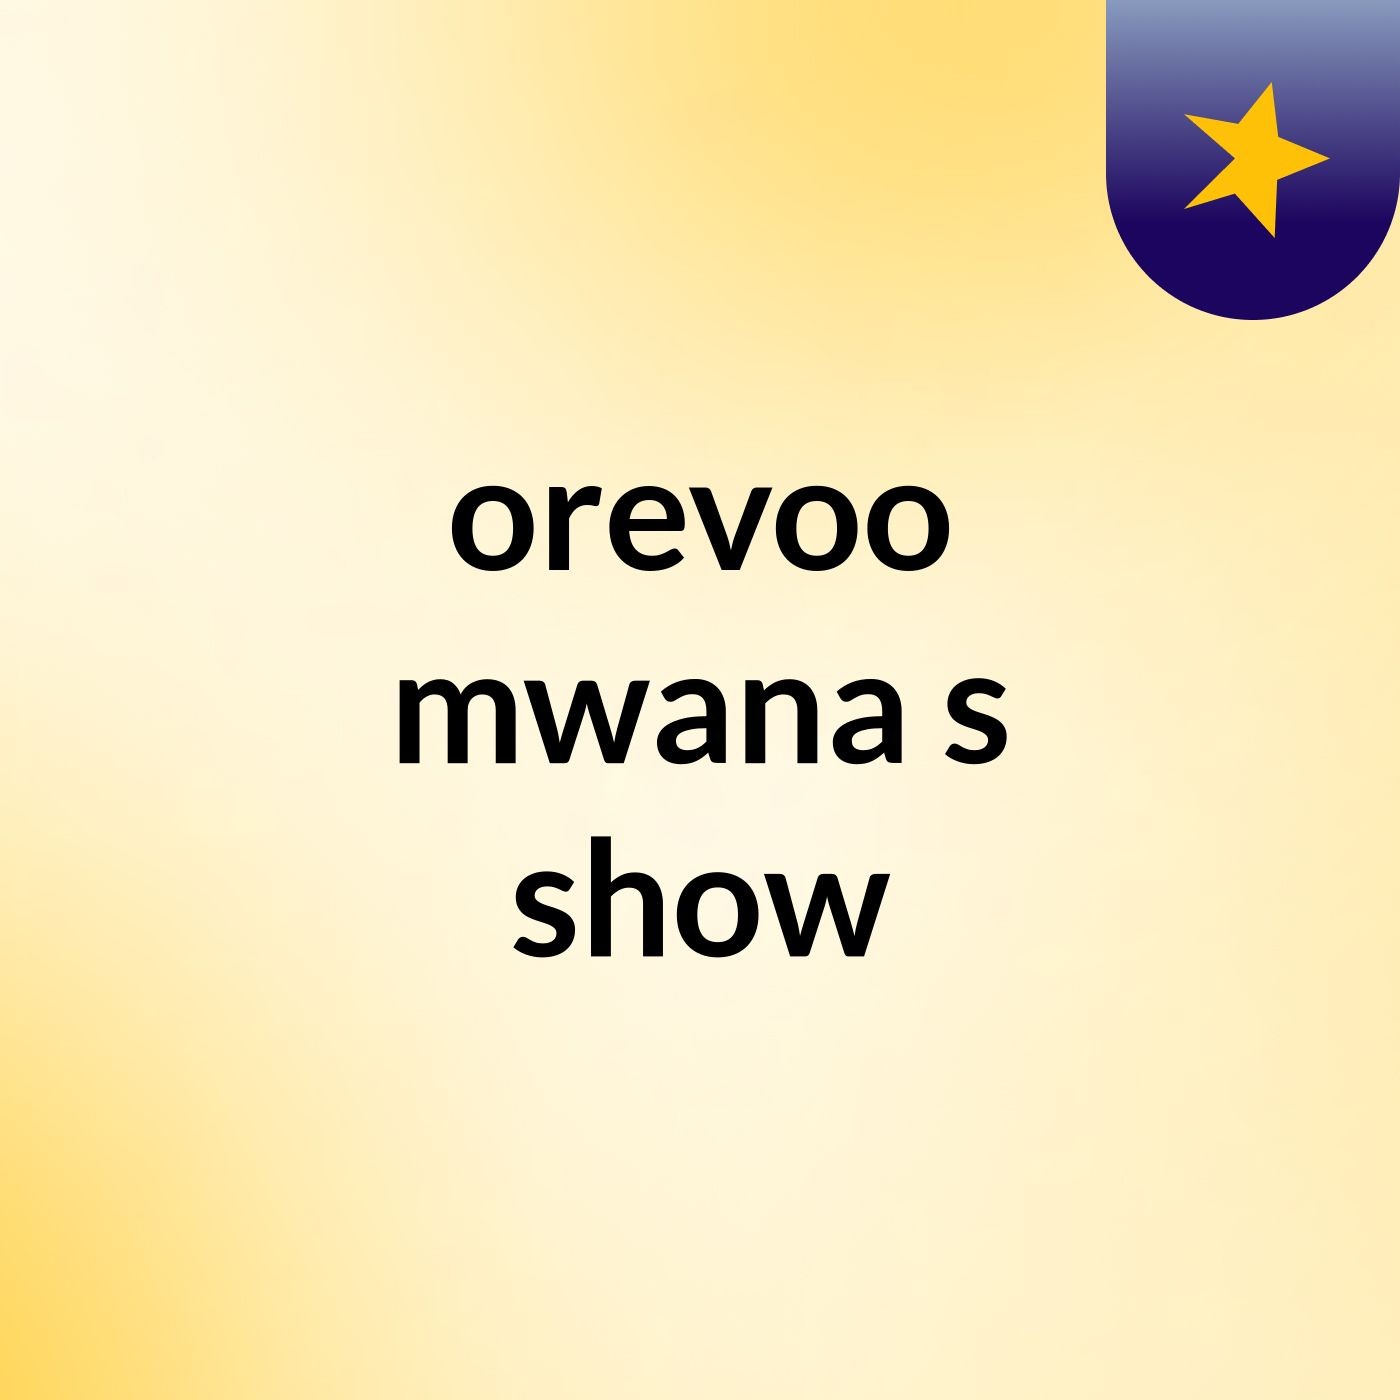 orevoo mwana's show